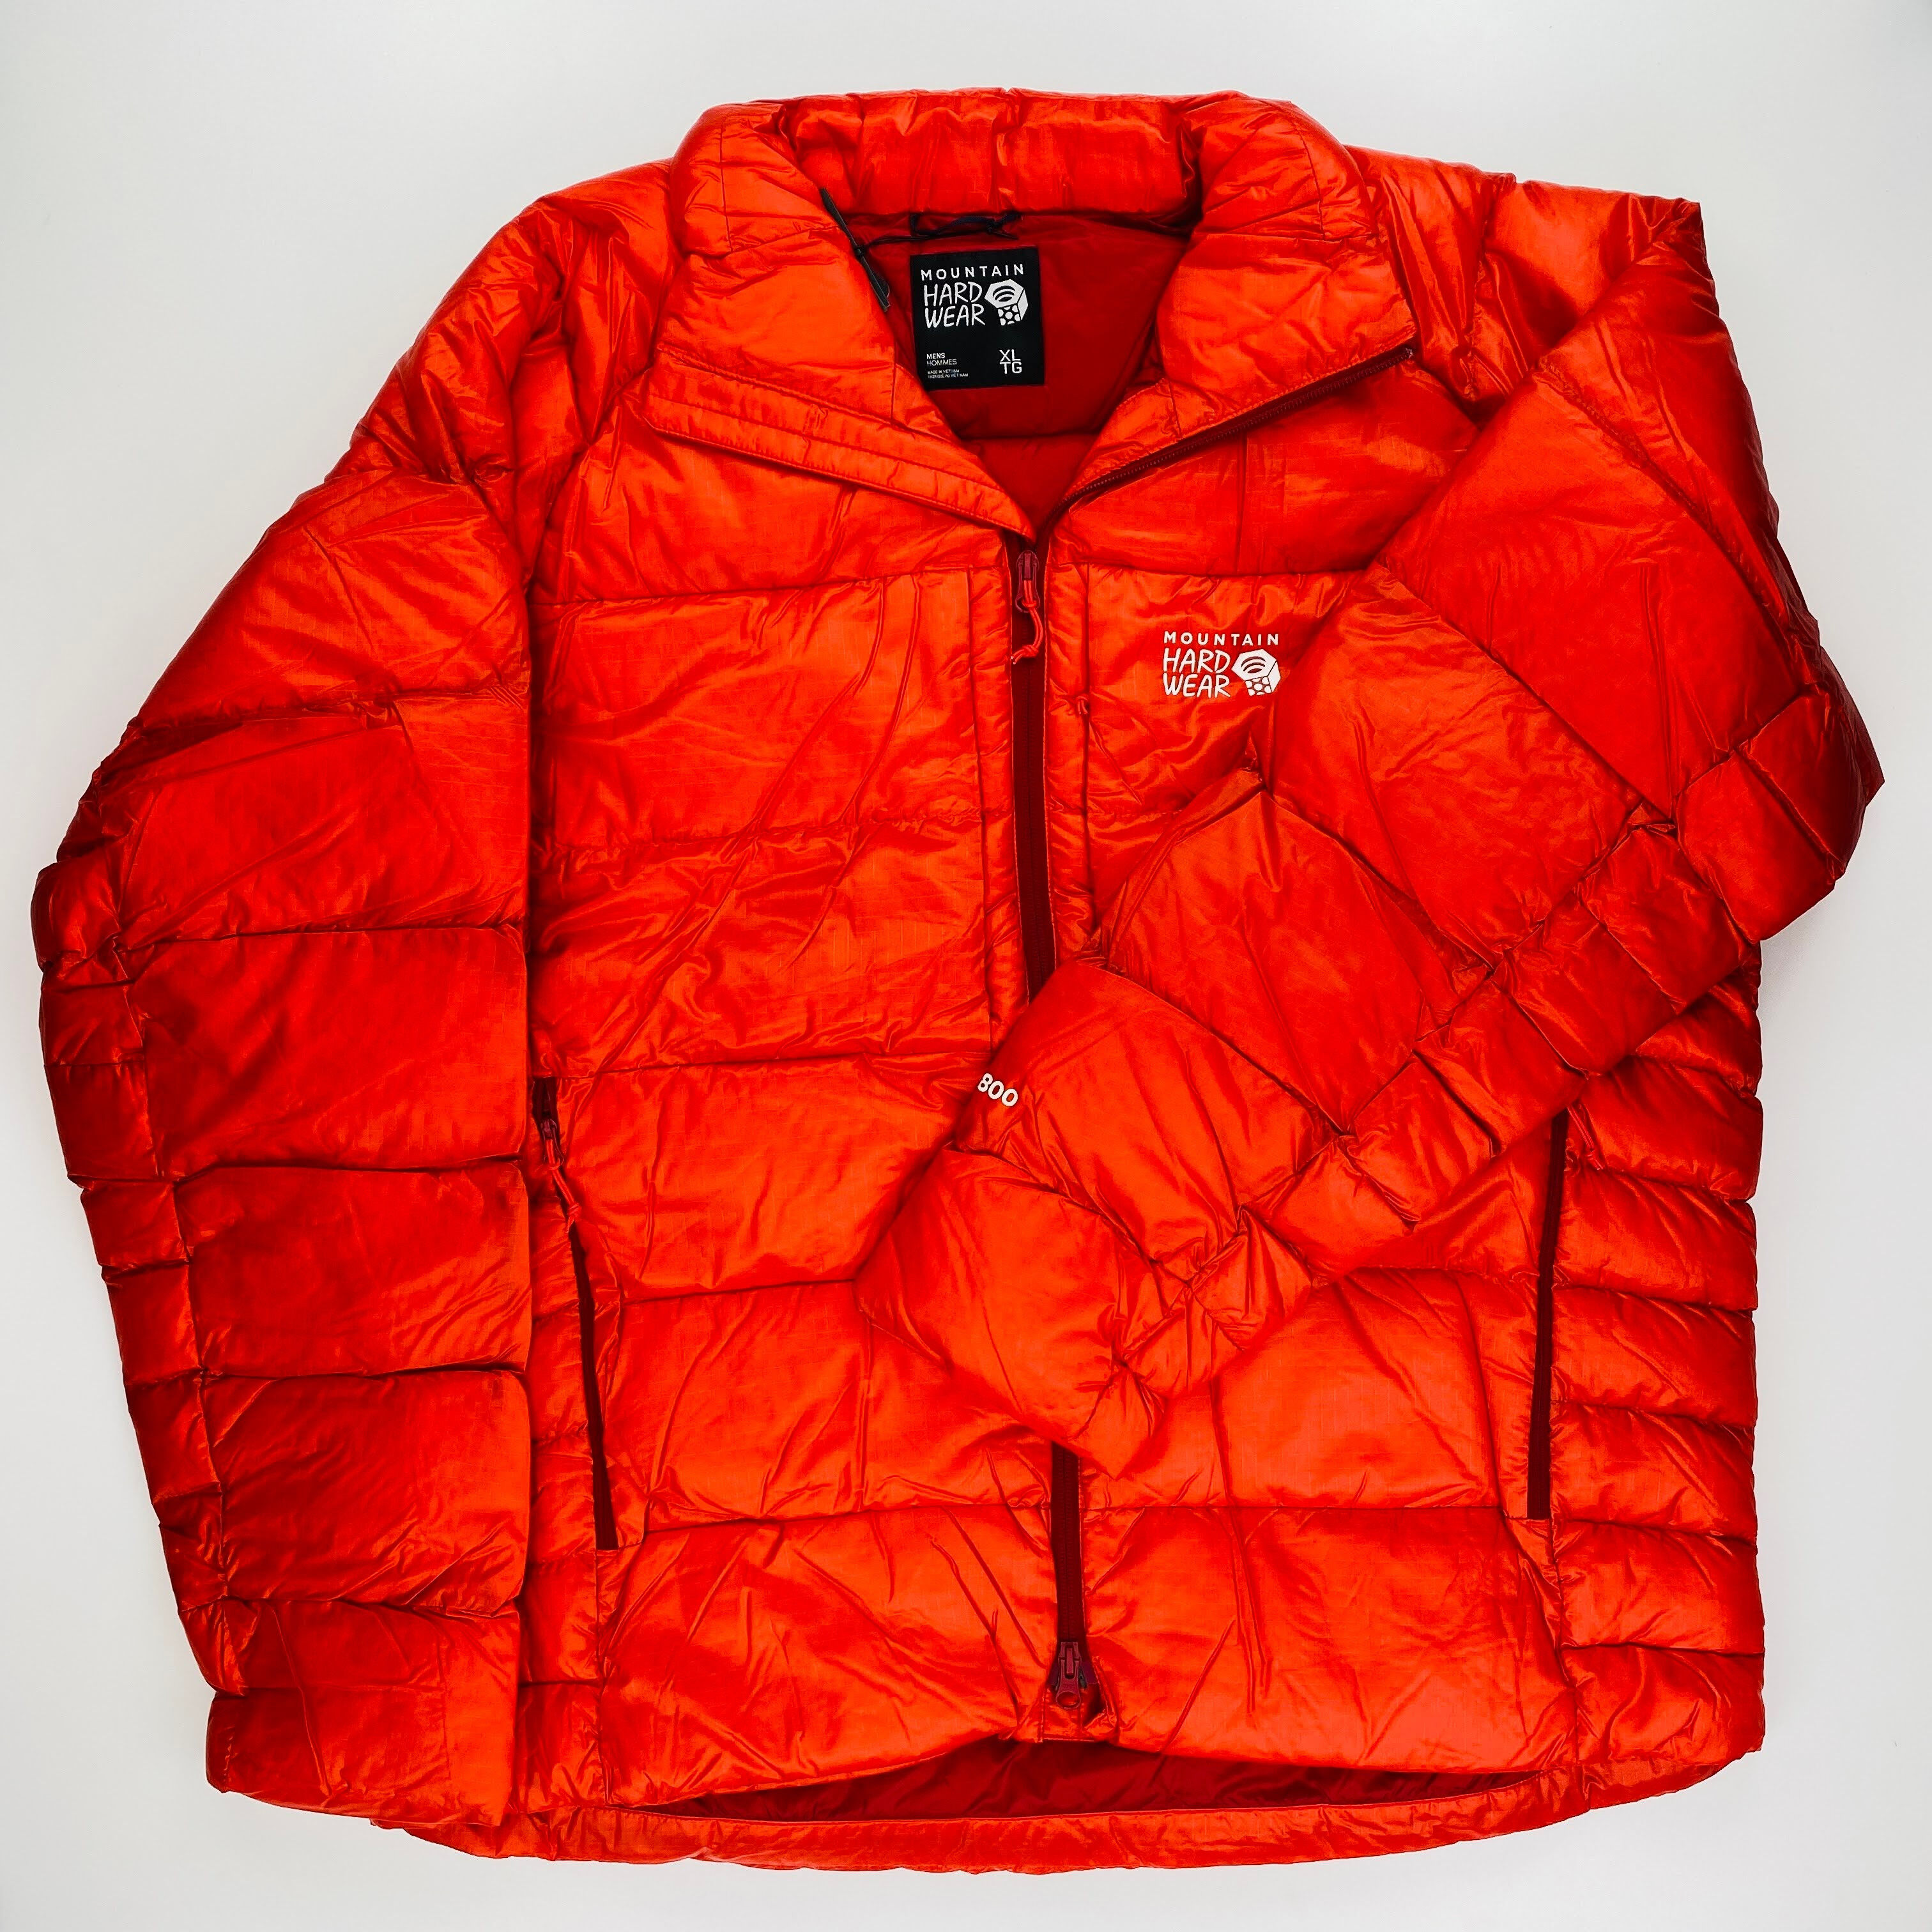 Mountain Hardwear Phantom Down Man Jacket - Giacca in piumino di seconda mano - Uomo - Rosso - XL | Hardloop